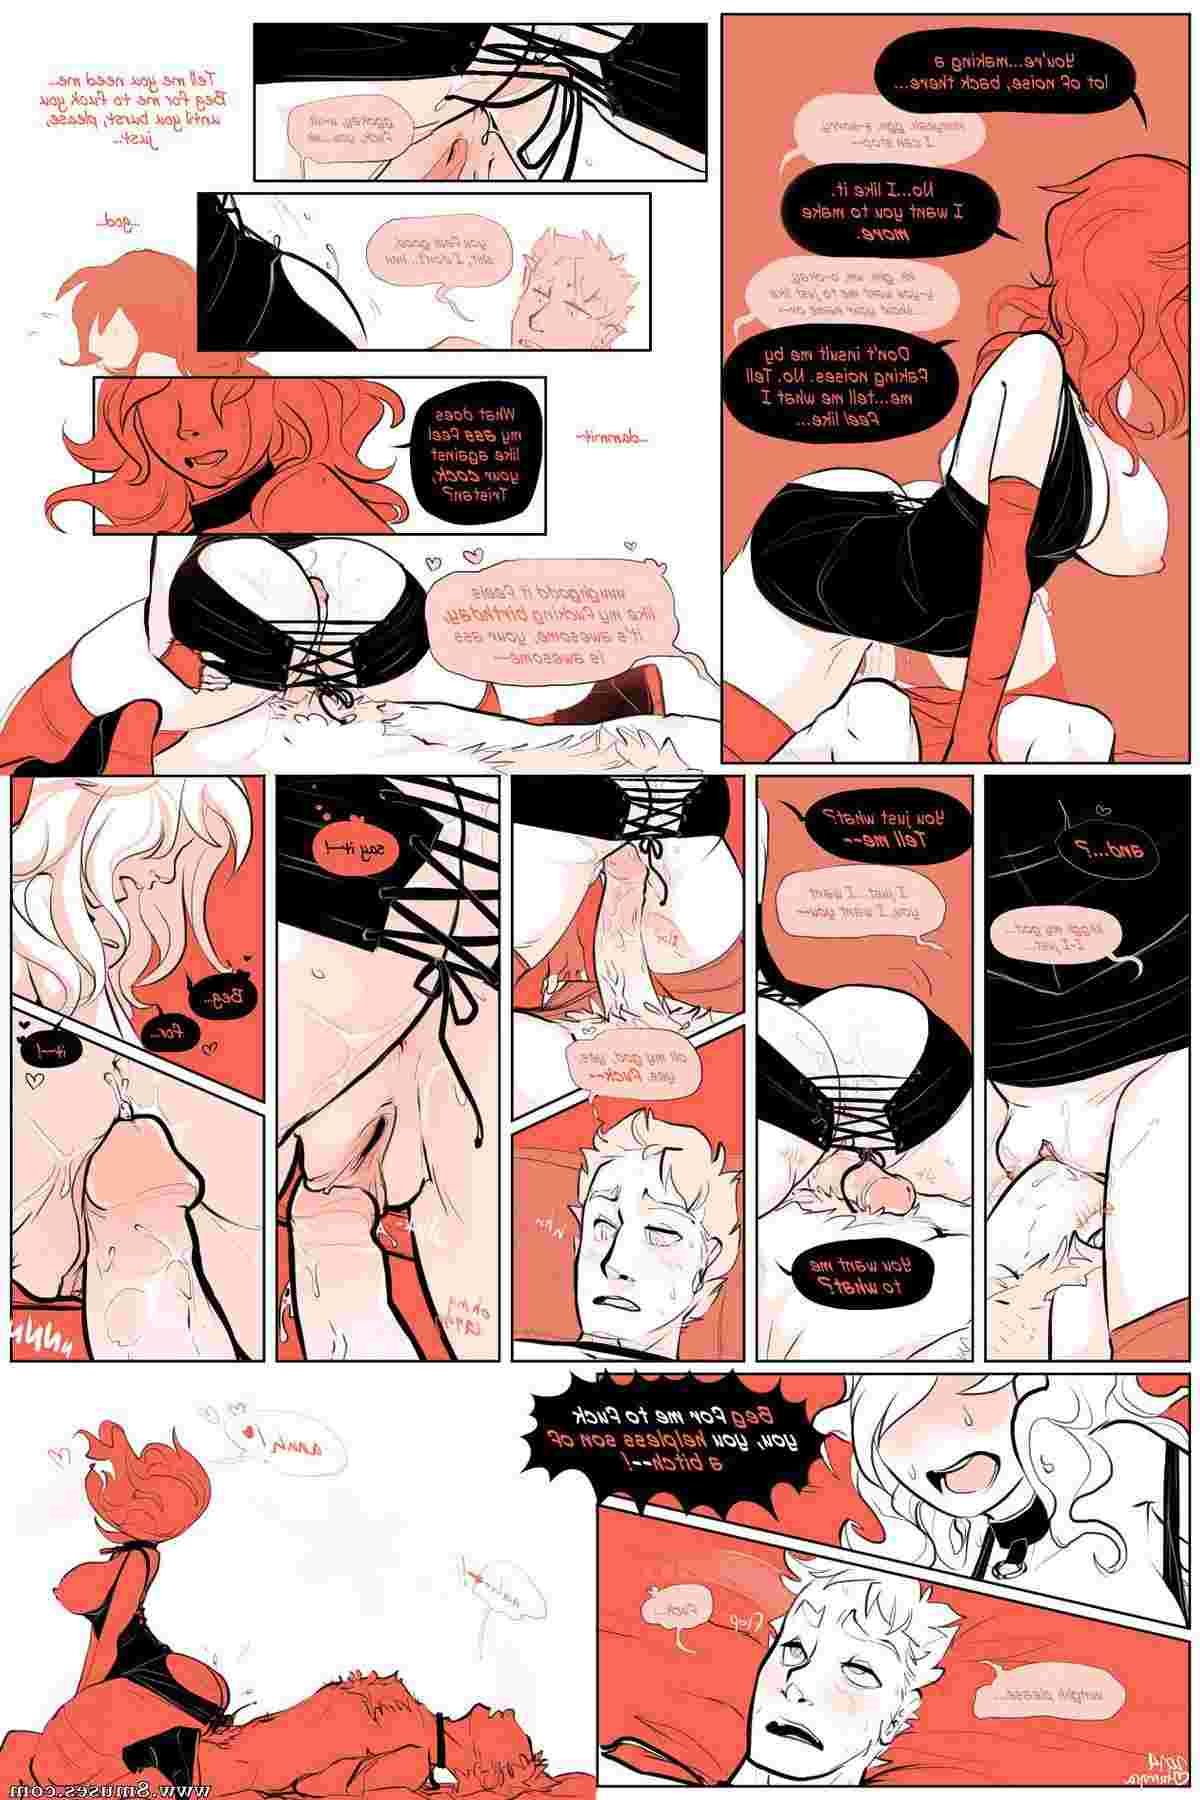 Slipshine-Comics/Neapolitan Neapolitan__8muses_-_Sex_and_Porn_Comics_85.jpg